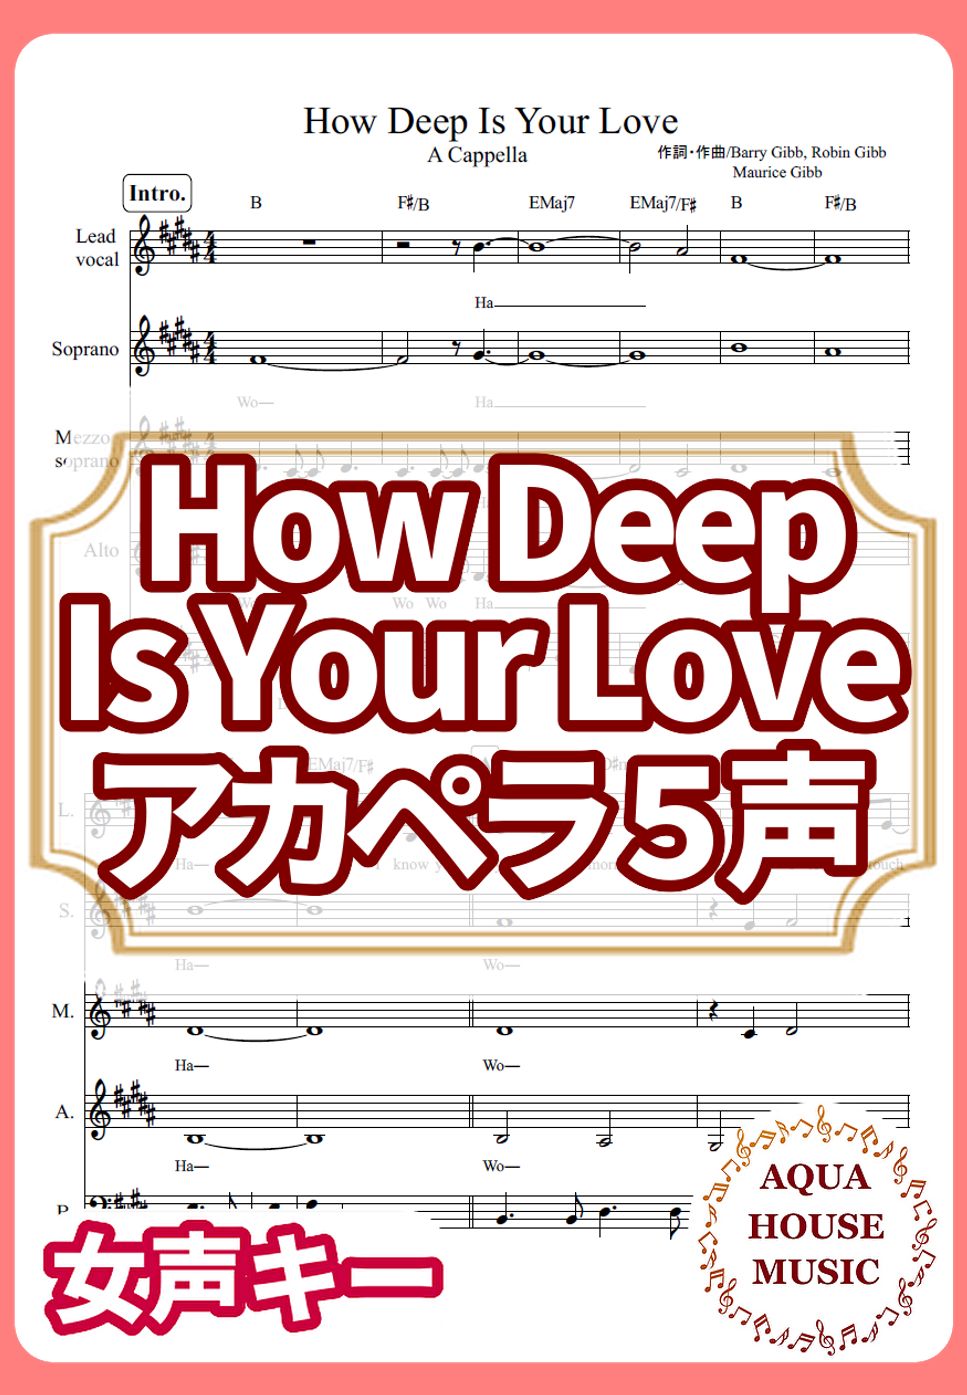 The Bee Gees - How Deep Is Your Love (アカペラ楽譜♪５声ボイパなし) by 飯田 亜紗子